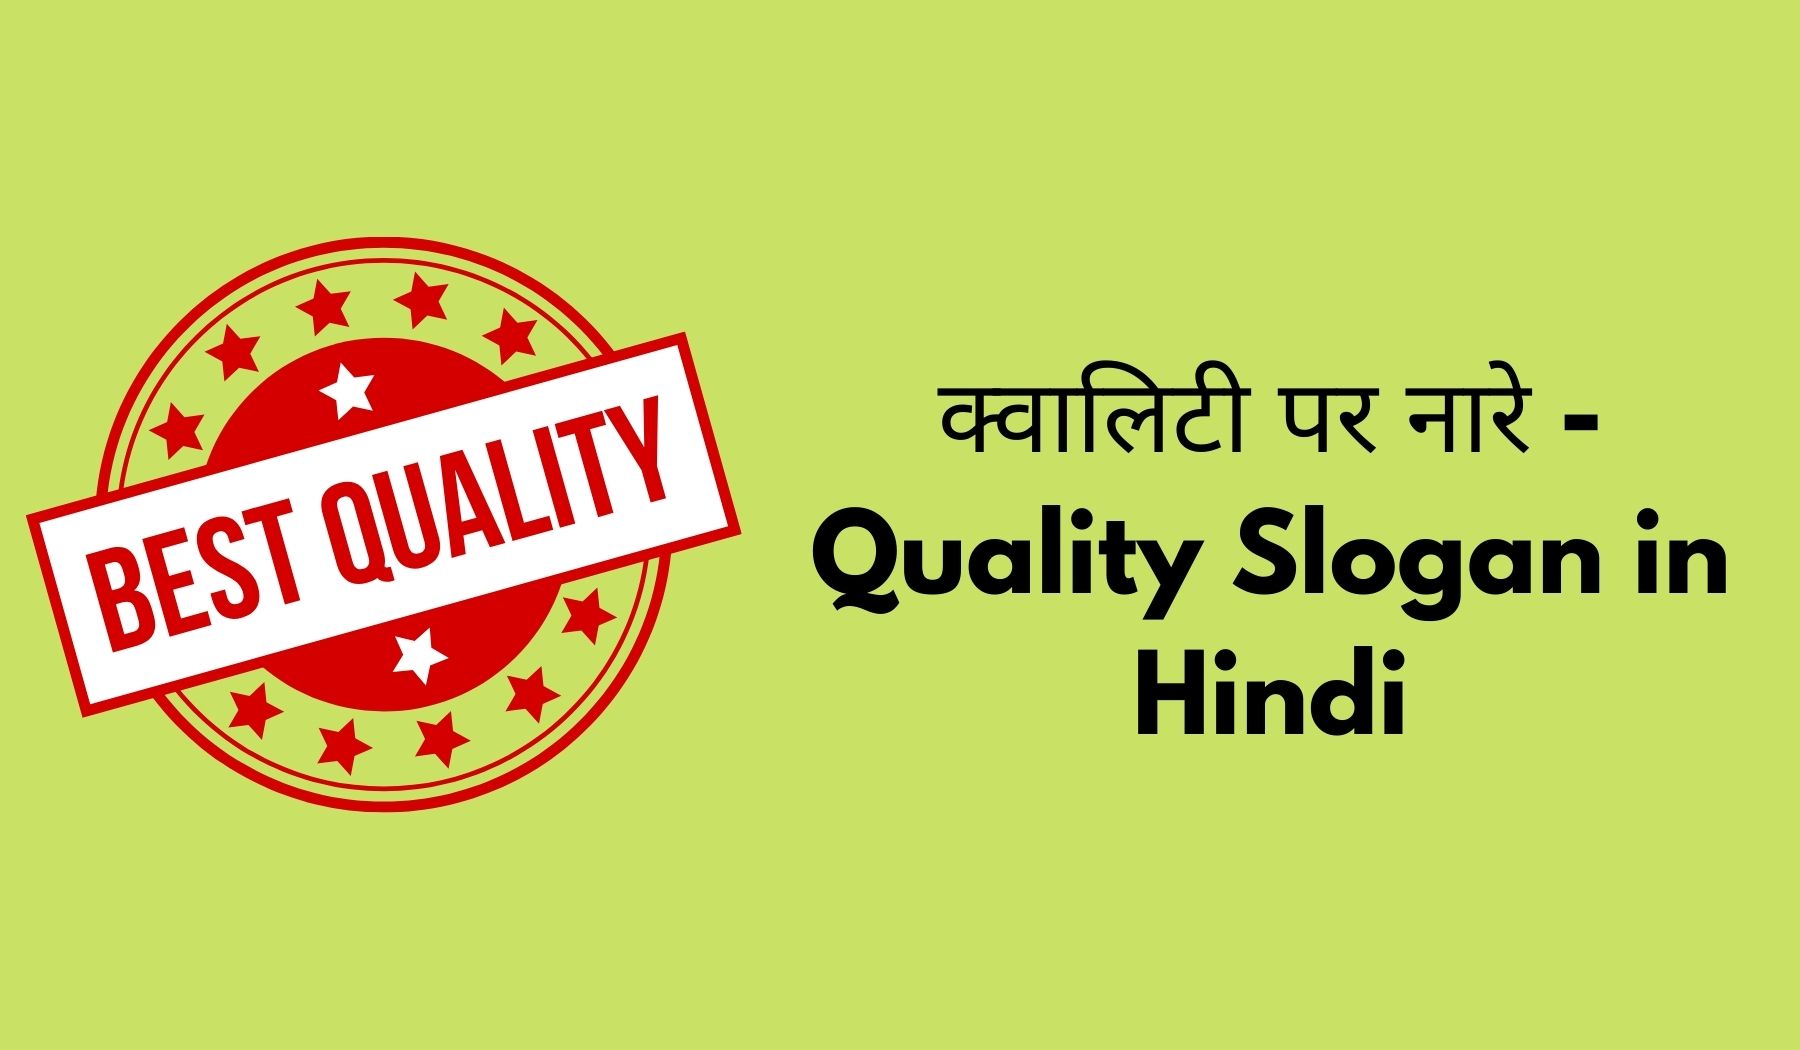 क्वालिटी पर नारे - Quality Slogan in Hindi - Hindipool